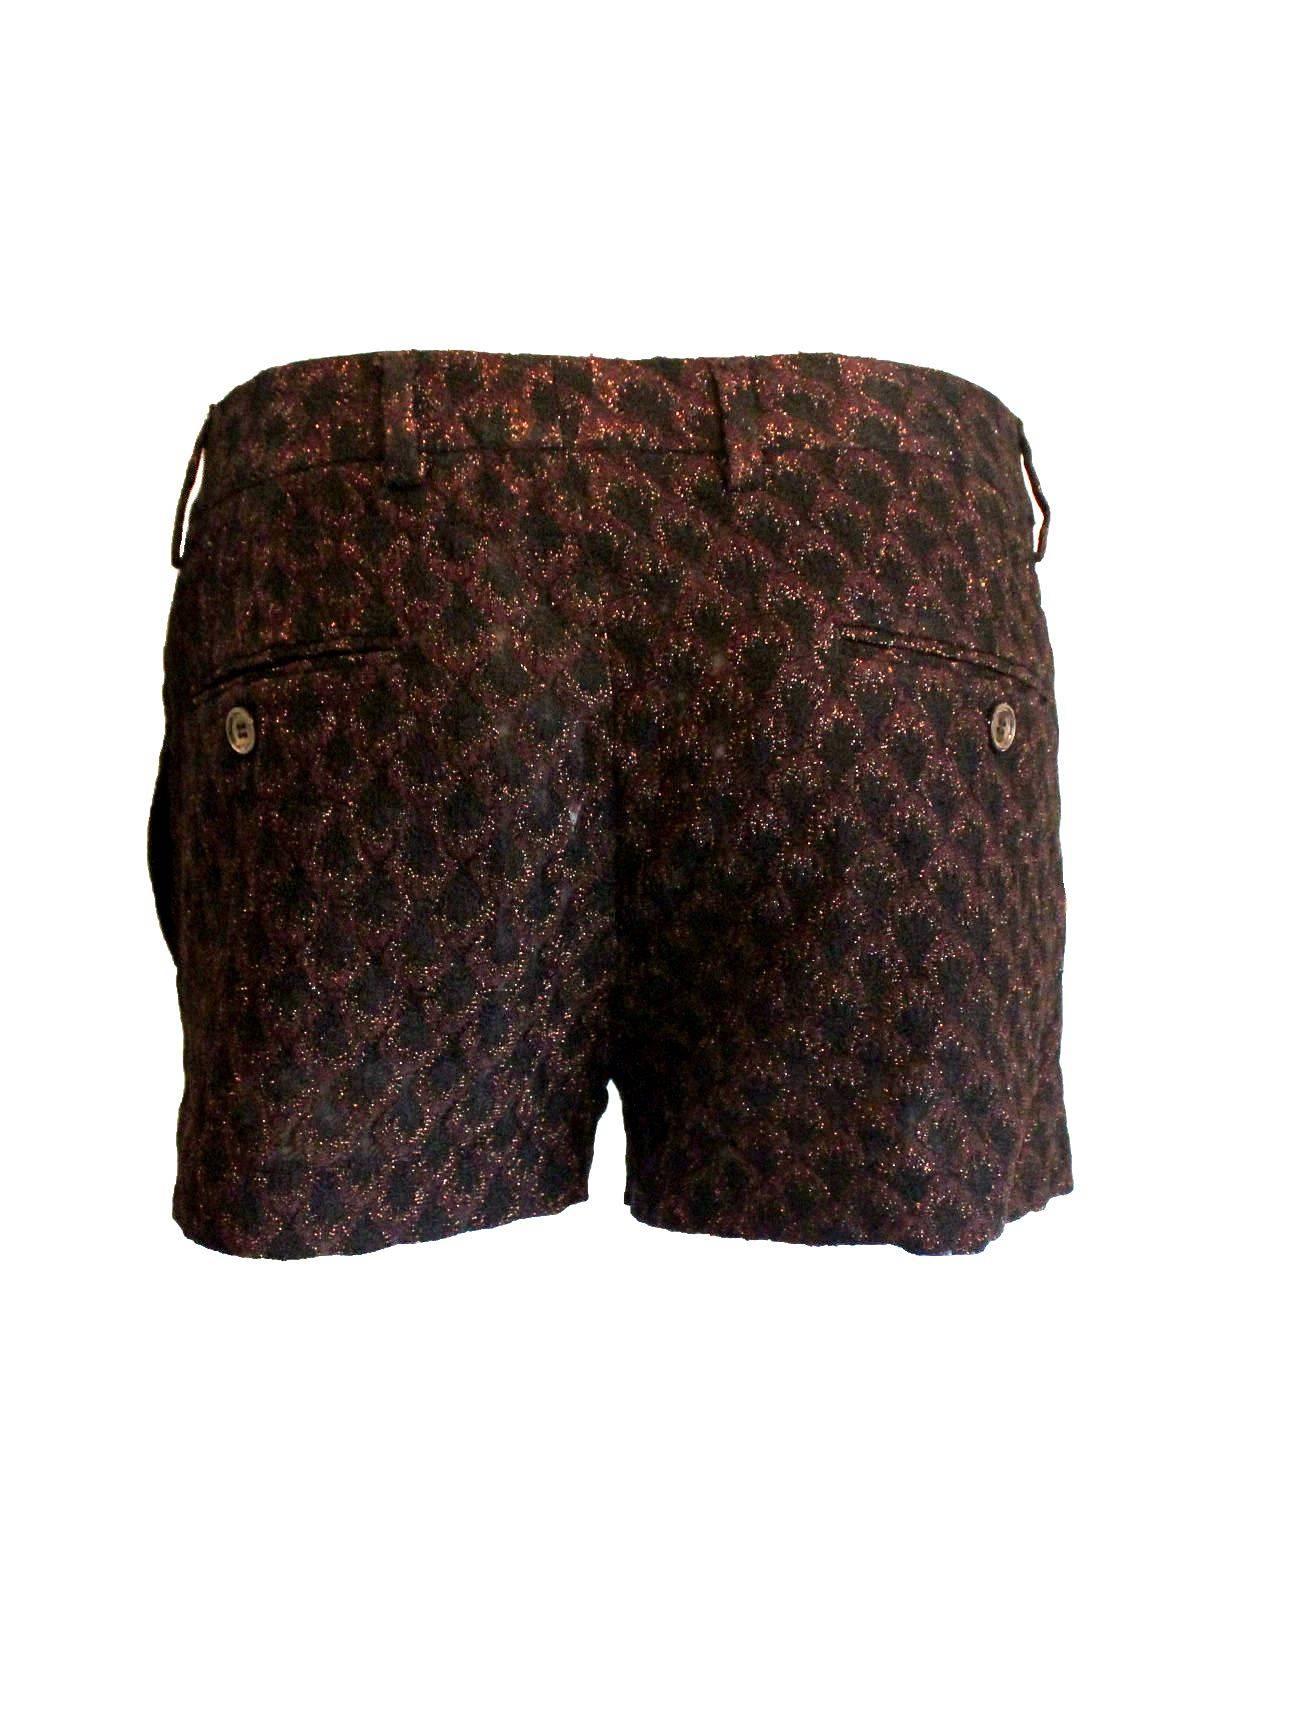 Black Missoni Lurex Crochet Knit Shorts Hot Pants